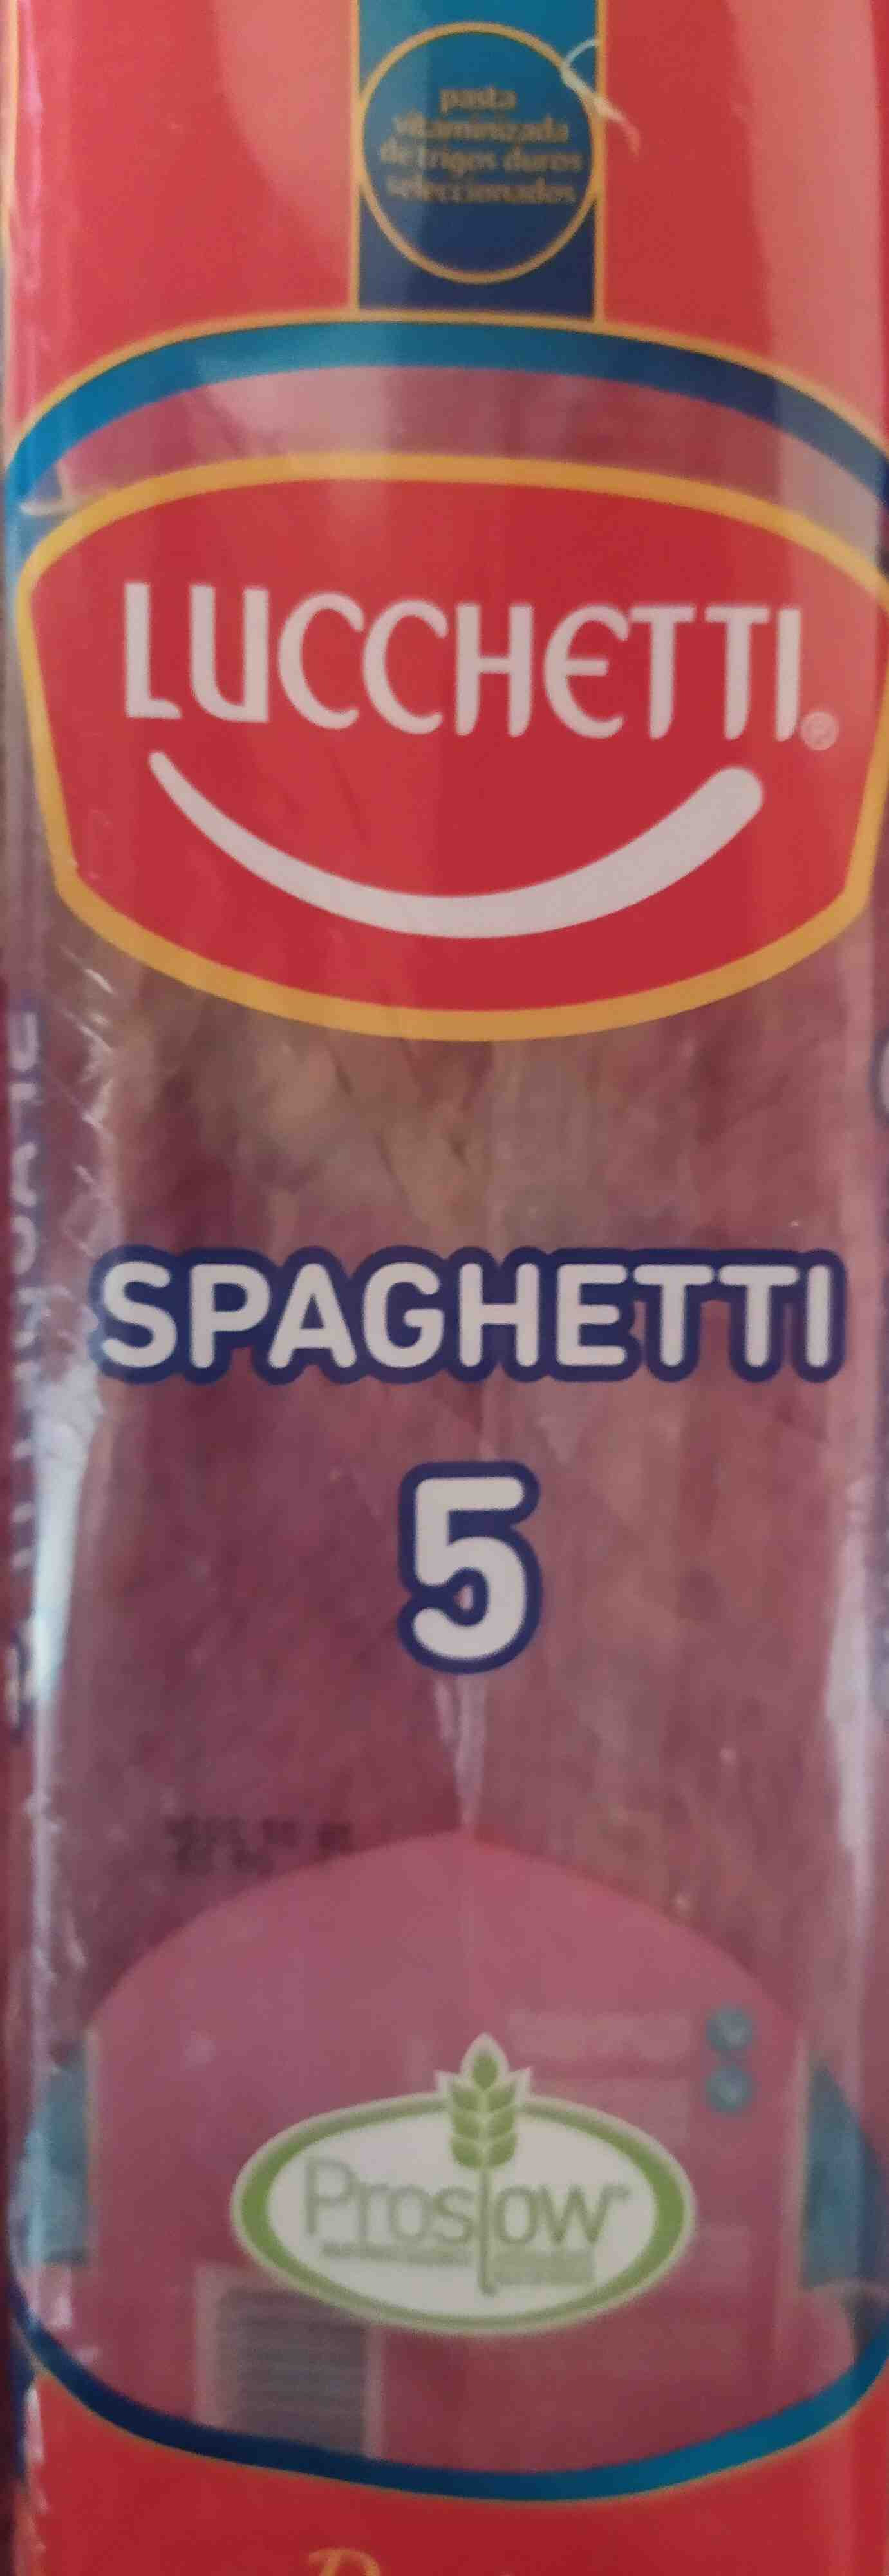 Lucchetti Spaghetti - Product - es